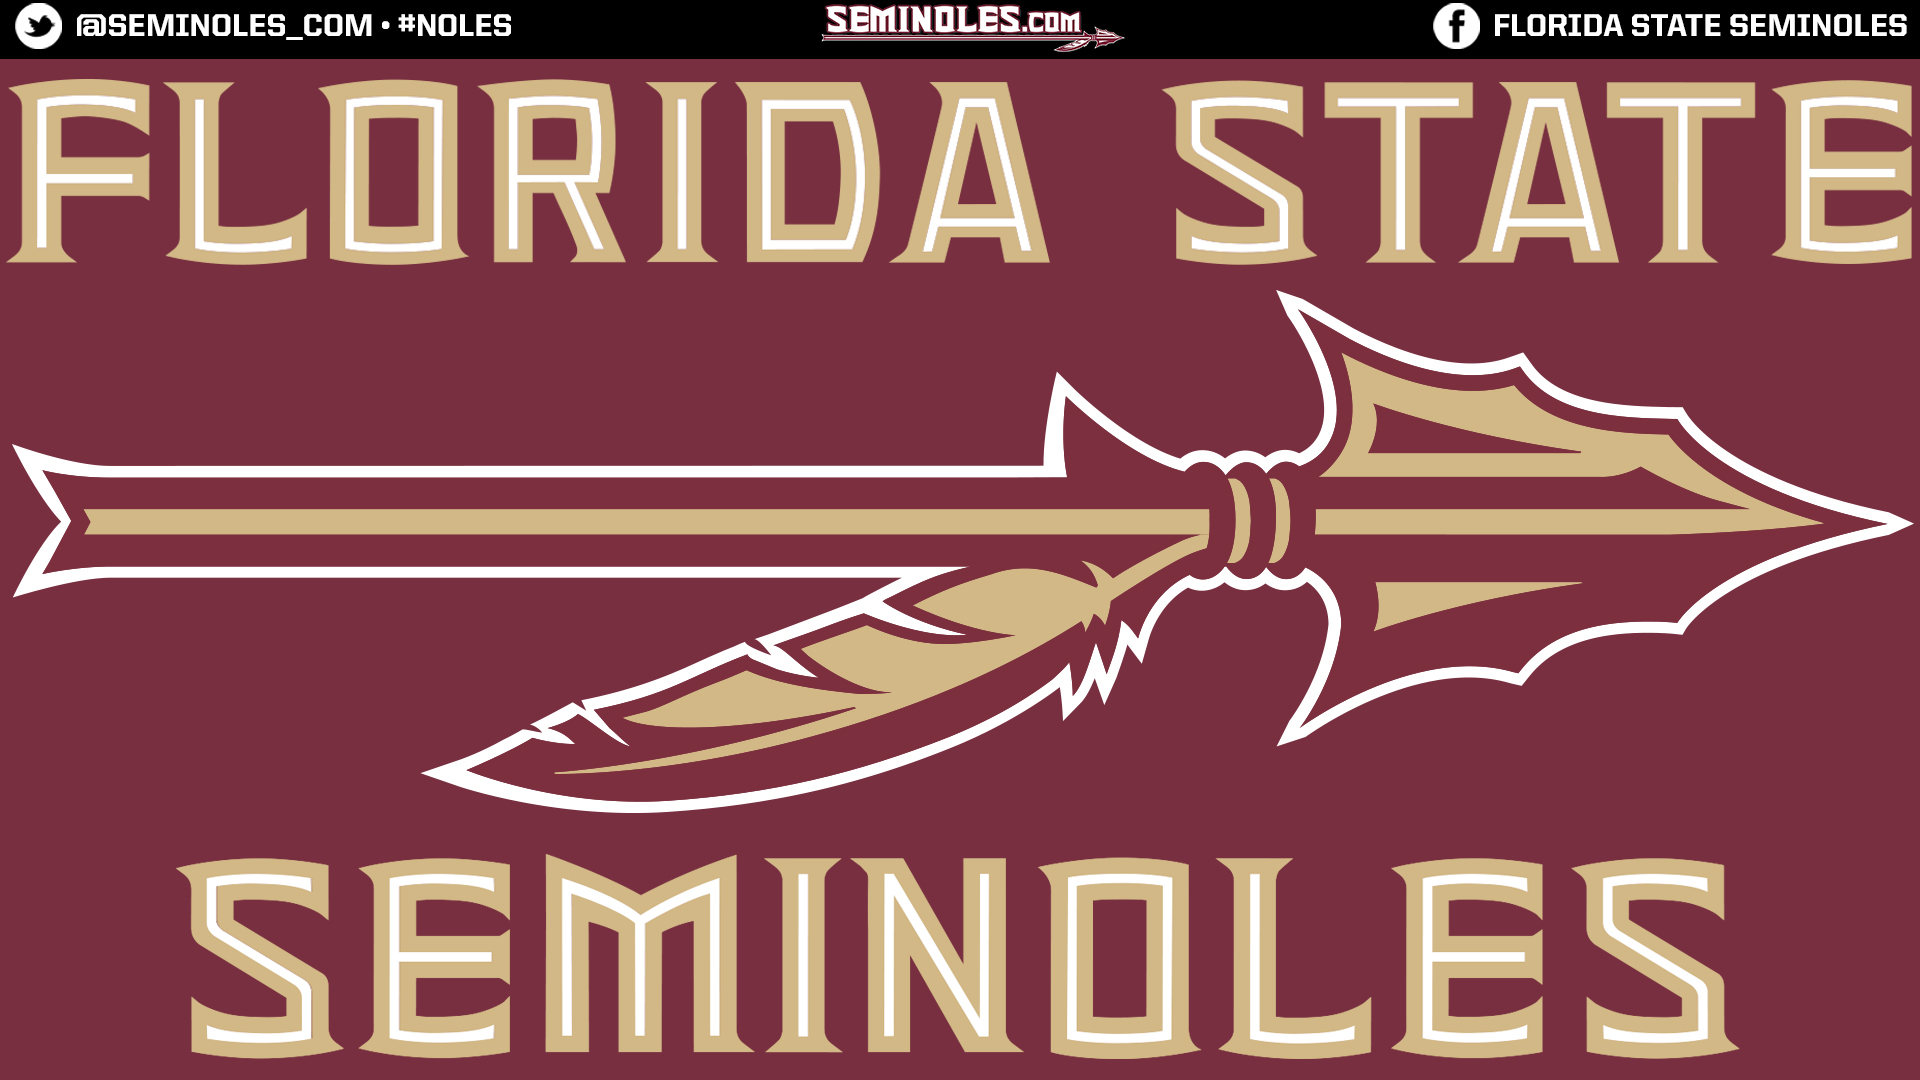 Florida State Seminoles Official Athletic Site Desktop Wallpaper